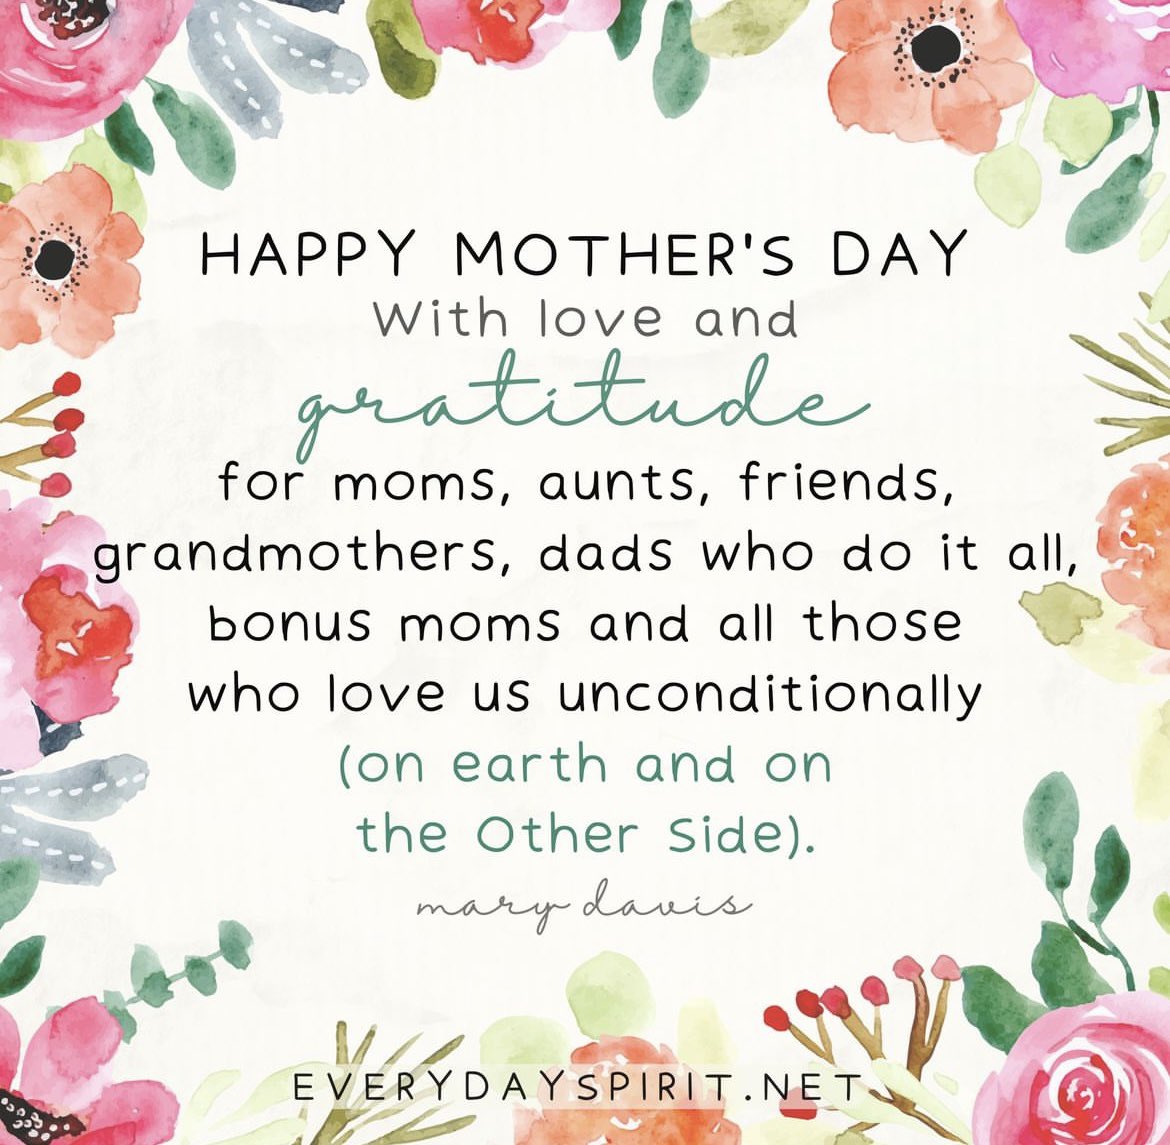 💐✨Happy Mother’s Day! #LoveWinsAll